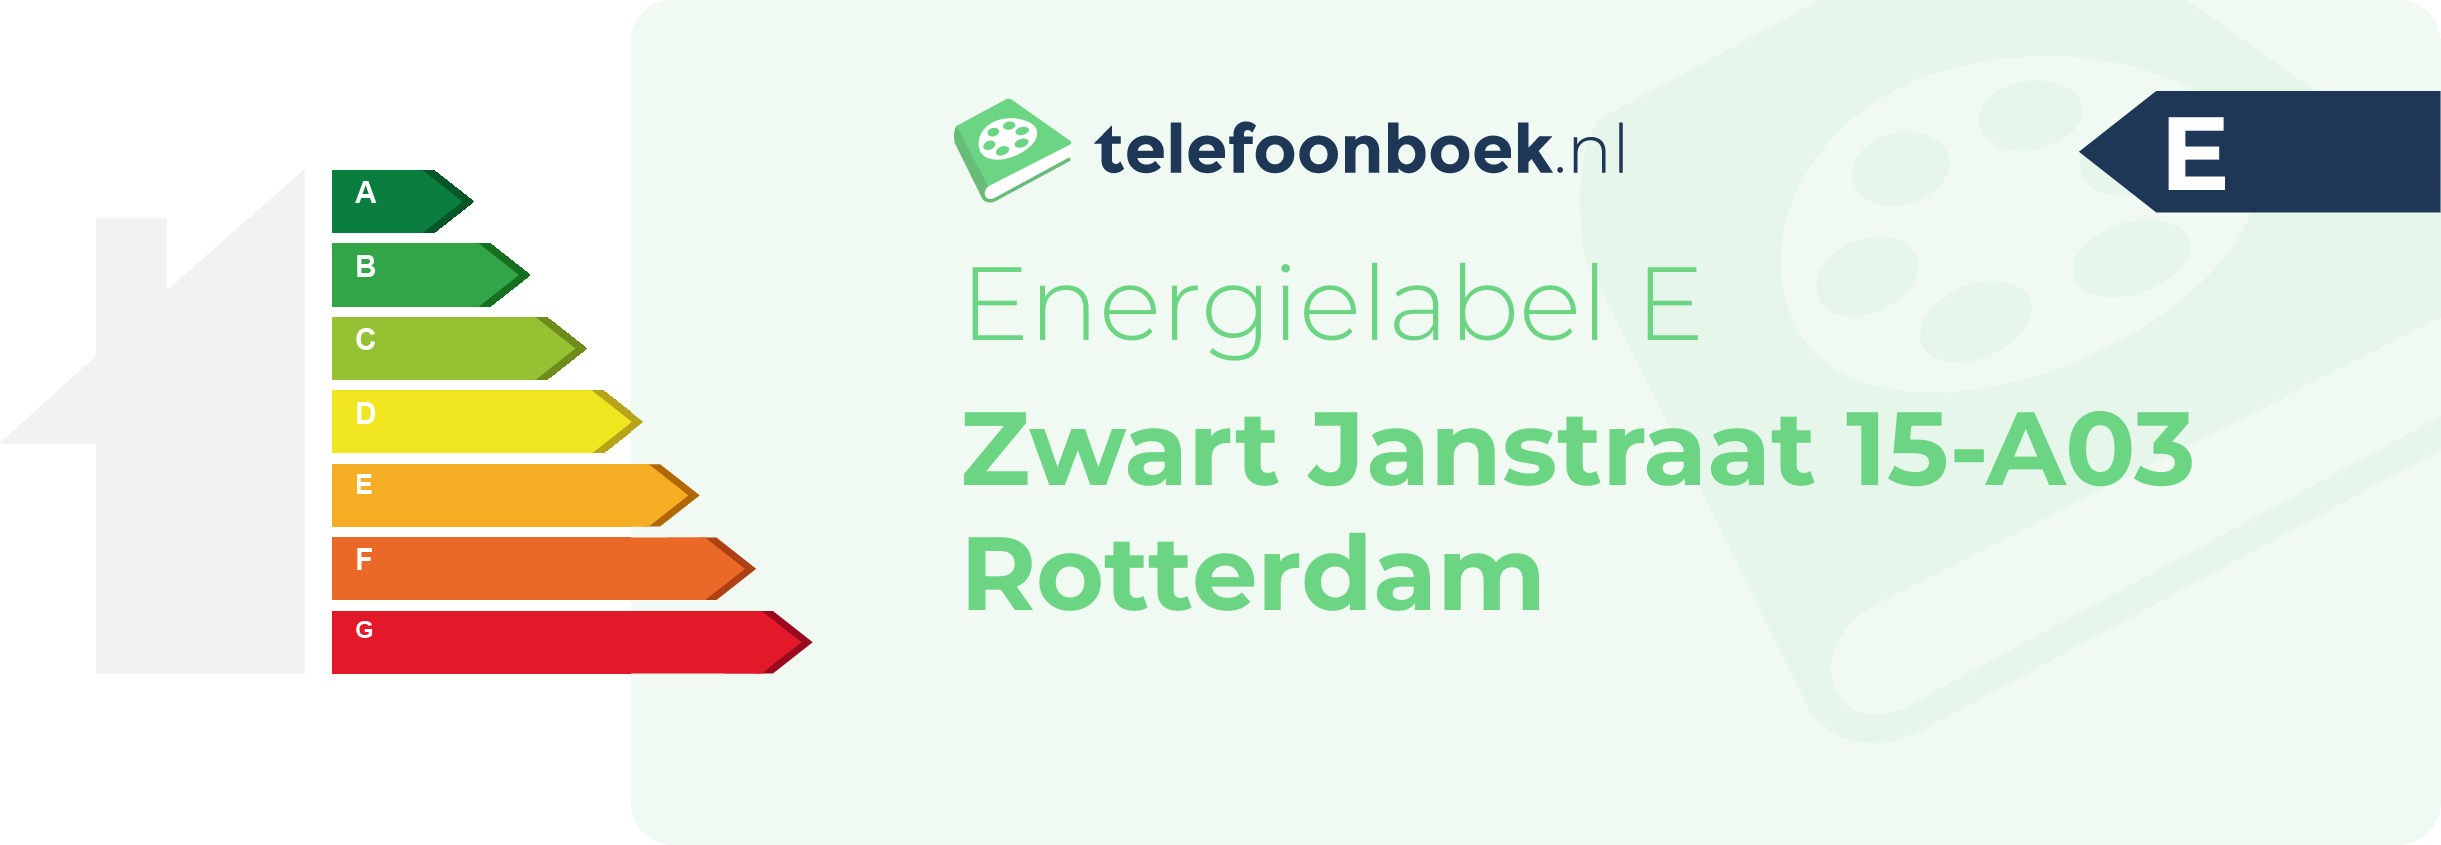 Energielabel Zwart Janstraat 15-A03 Rotterdam